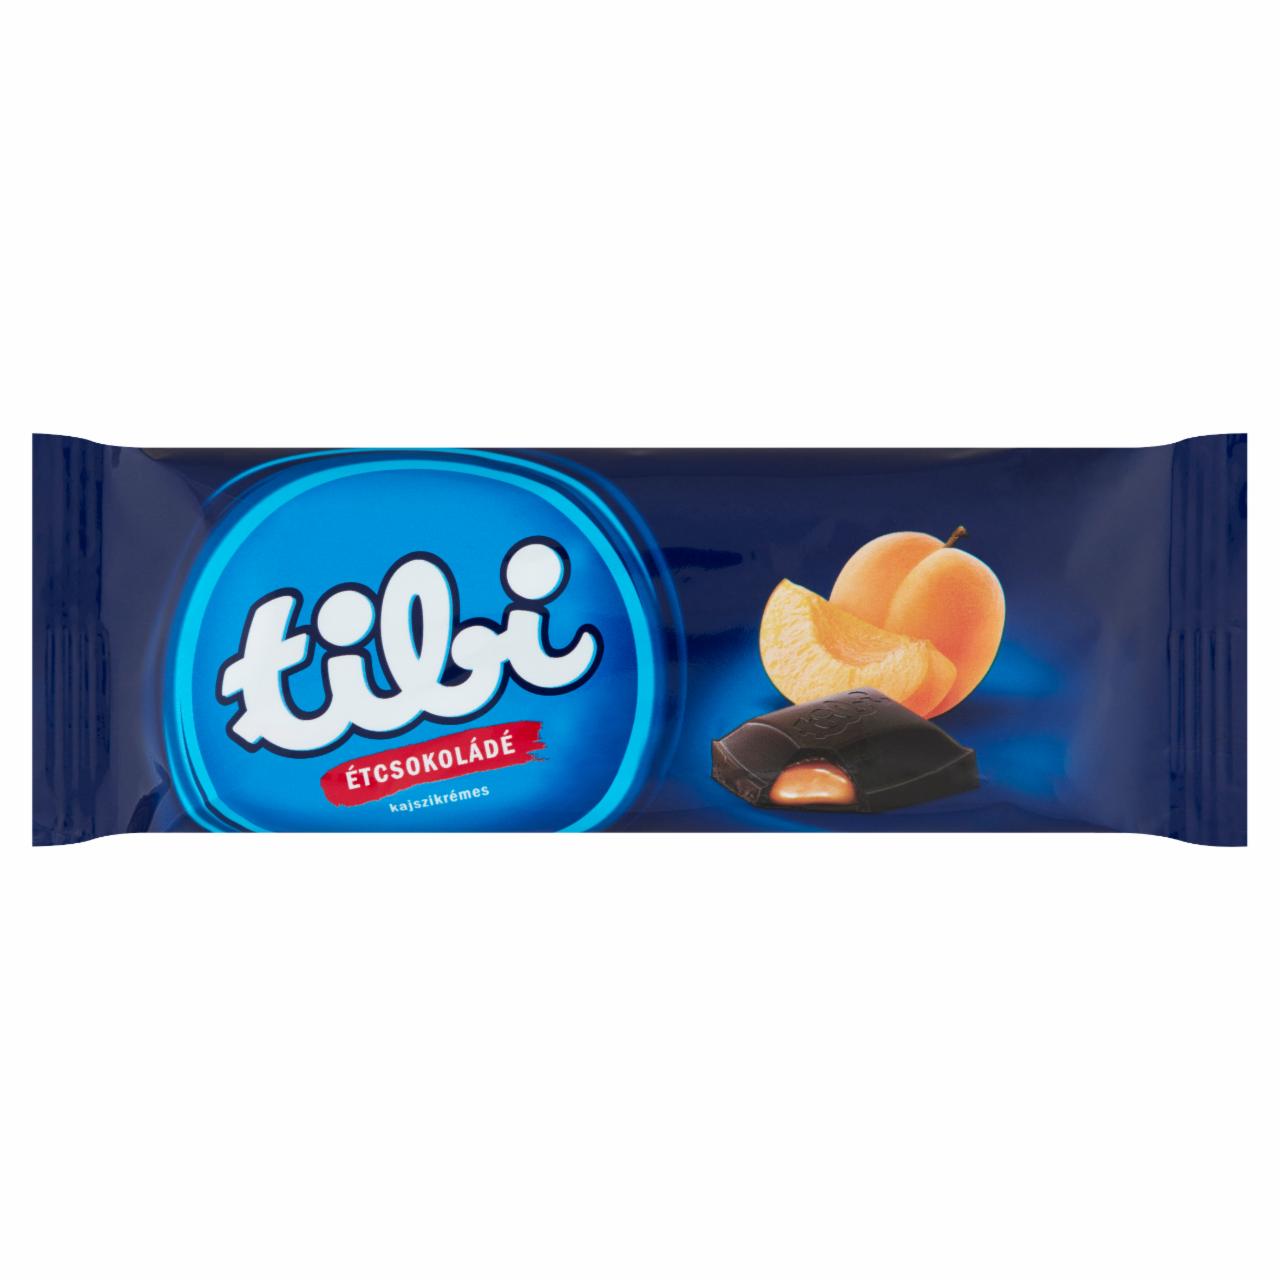 Photo - Tibi Chocolate with Apricot Filling 100 g